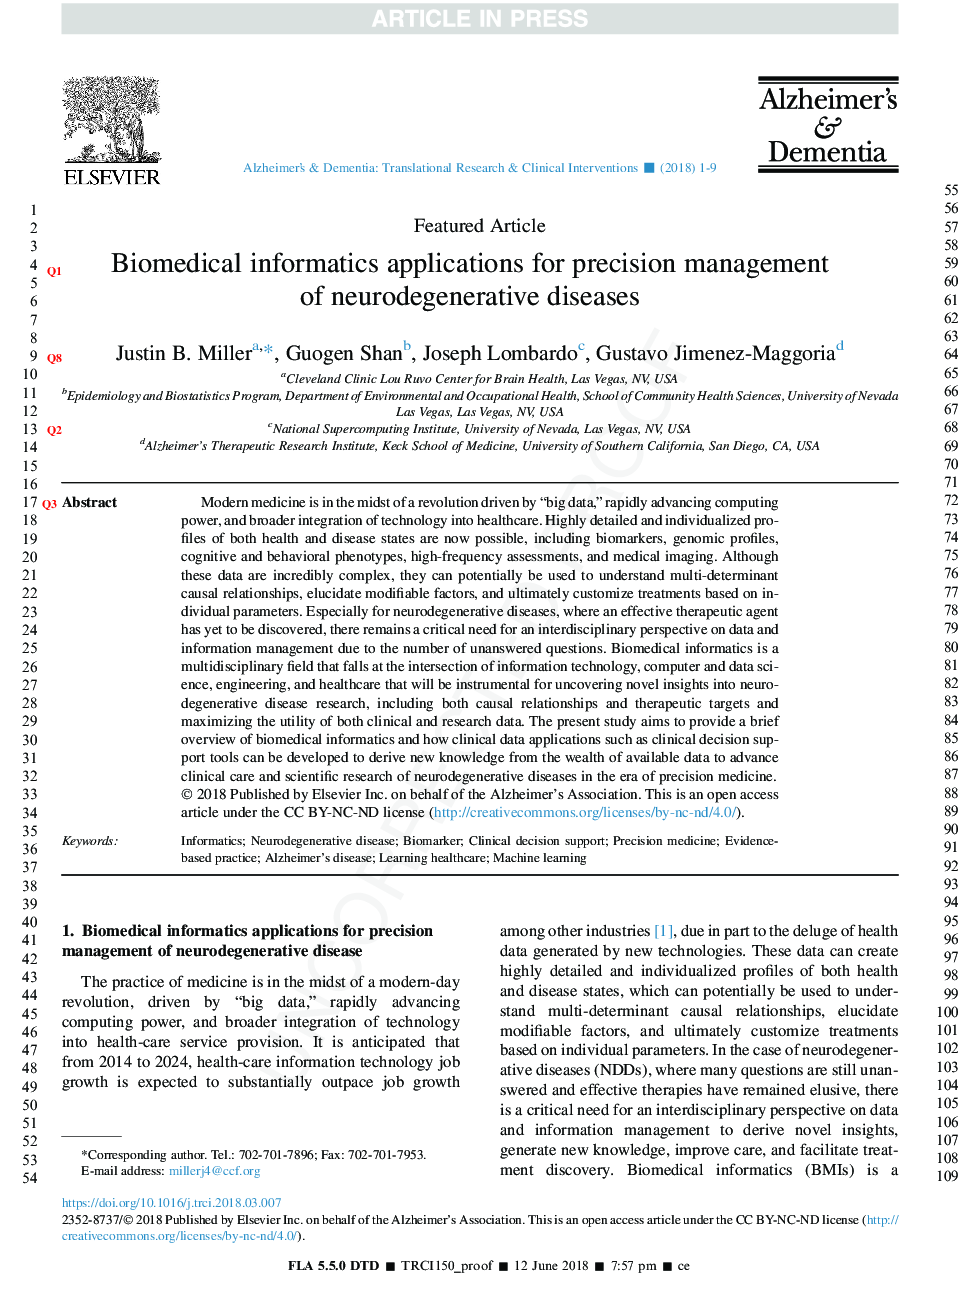 Biomedical informatics applications for precision management of neurodegenerative diseases